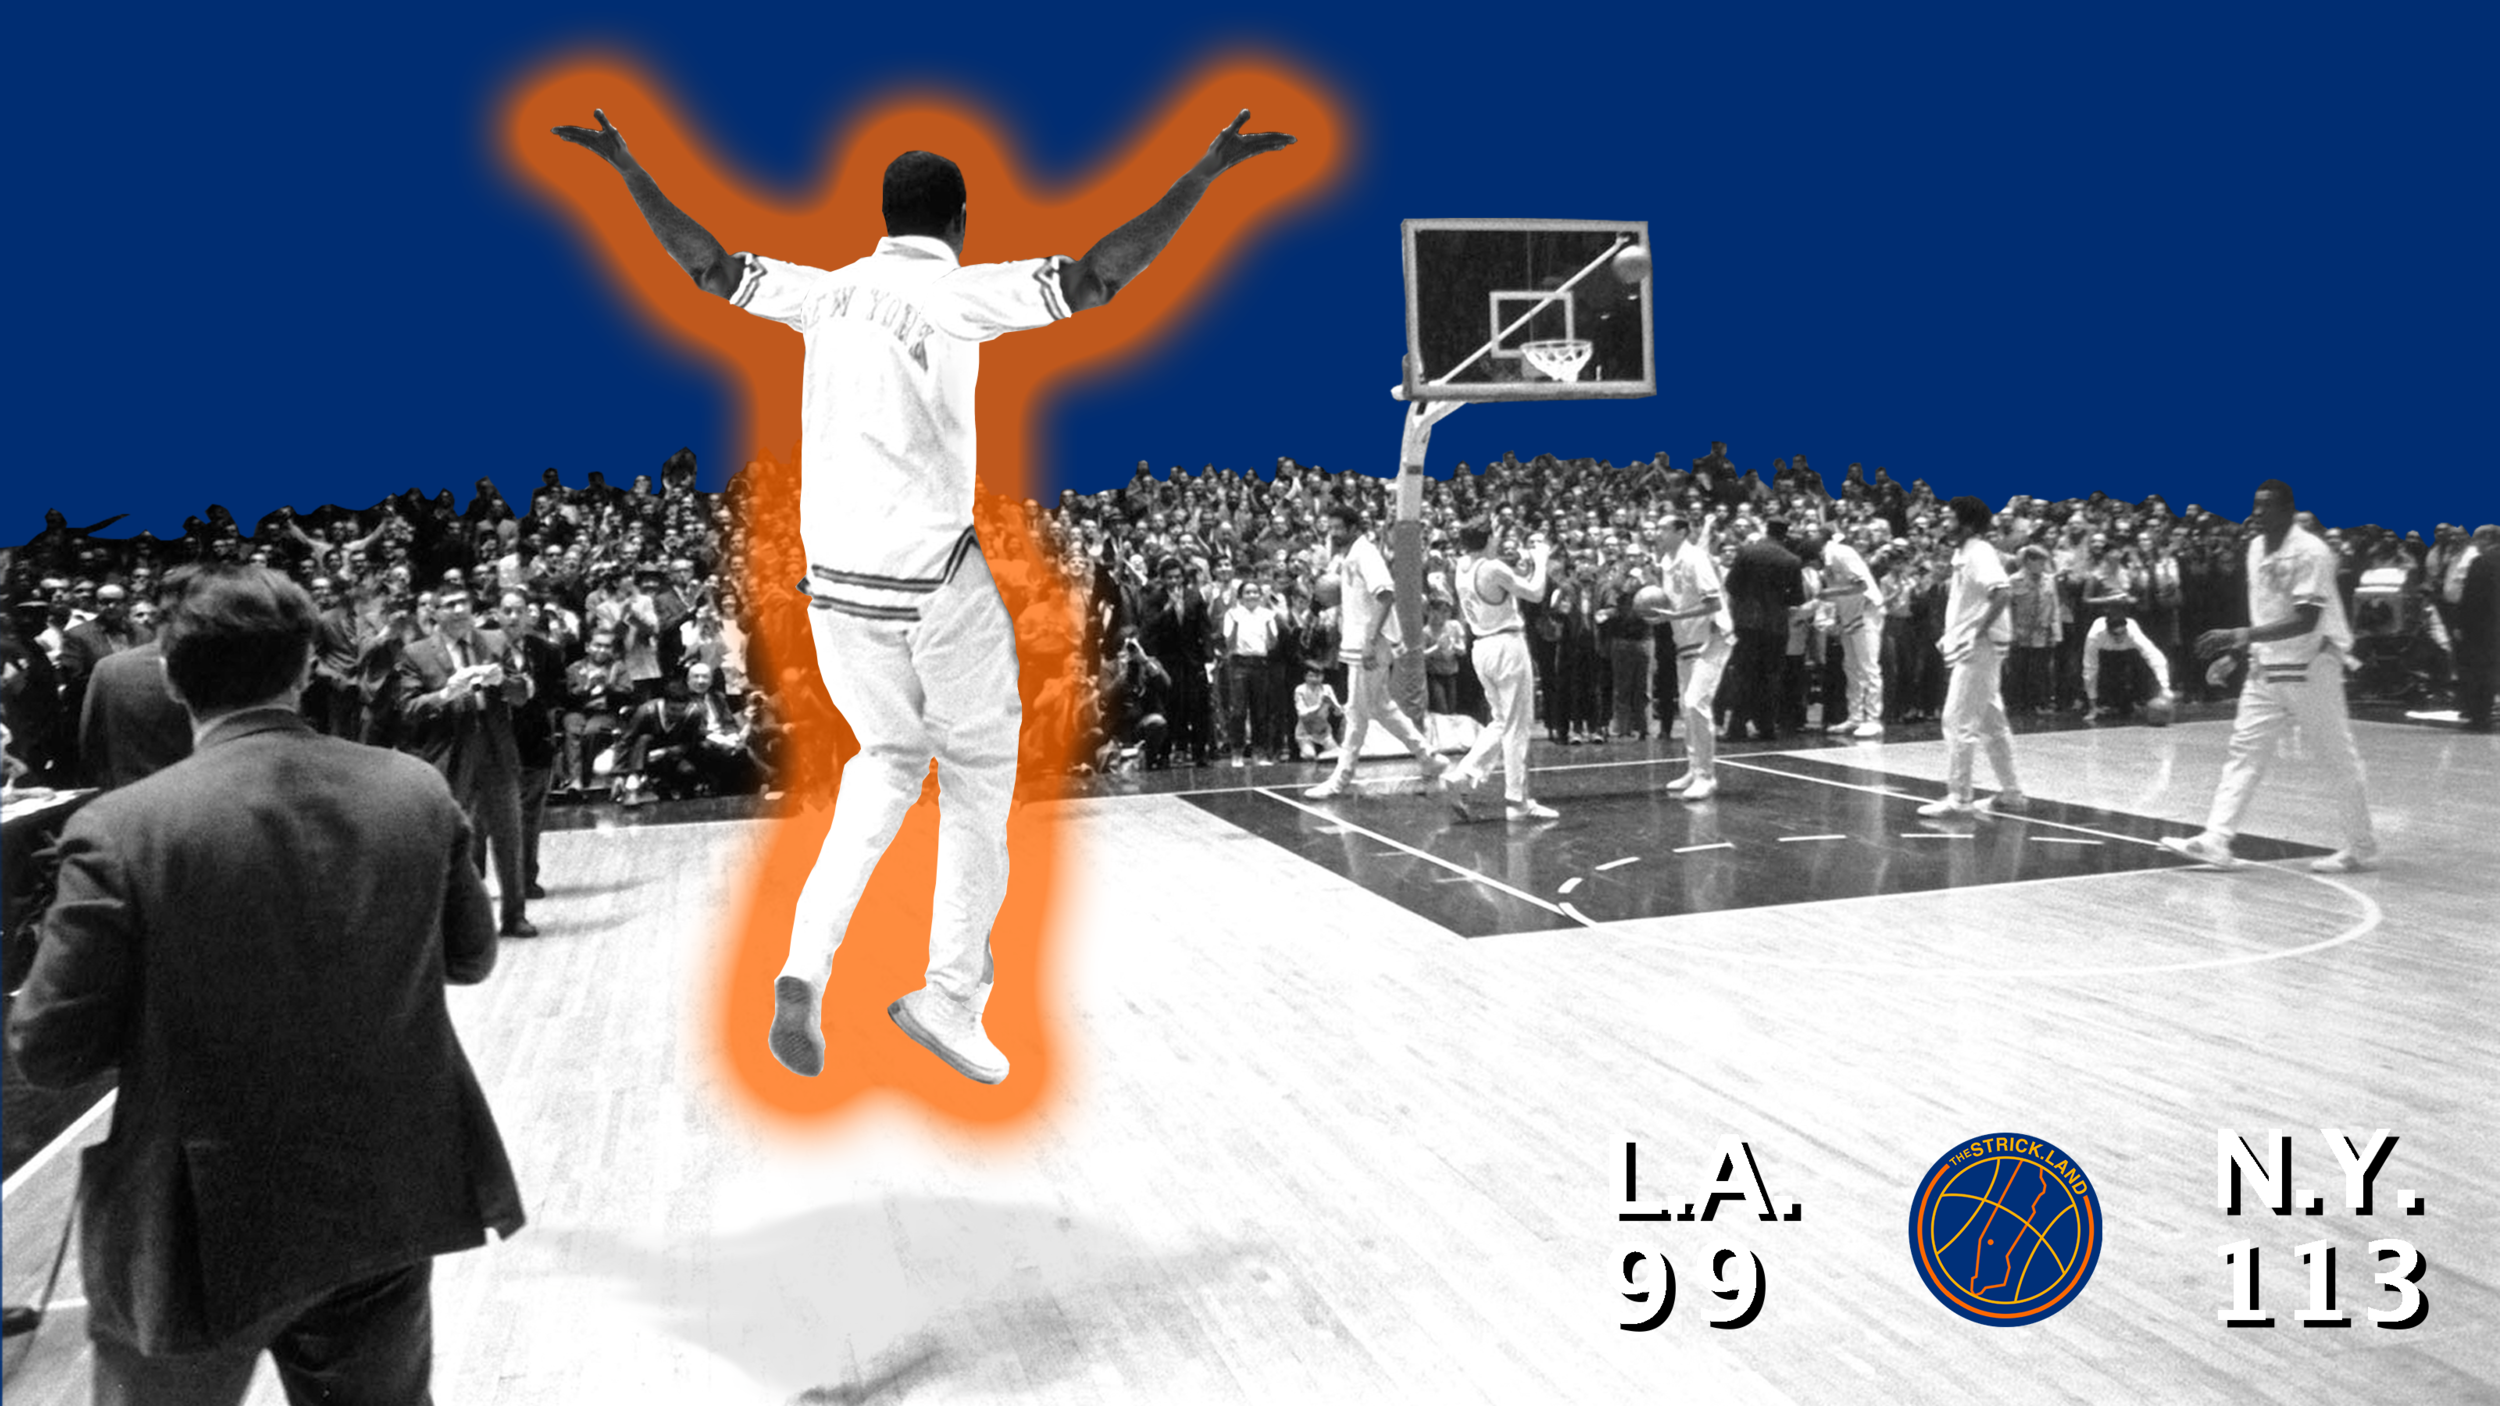 Obi Toppin's impressive dunk couldn't even inspire Knicks